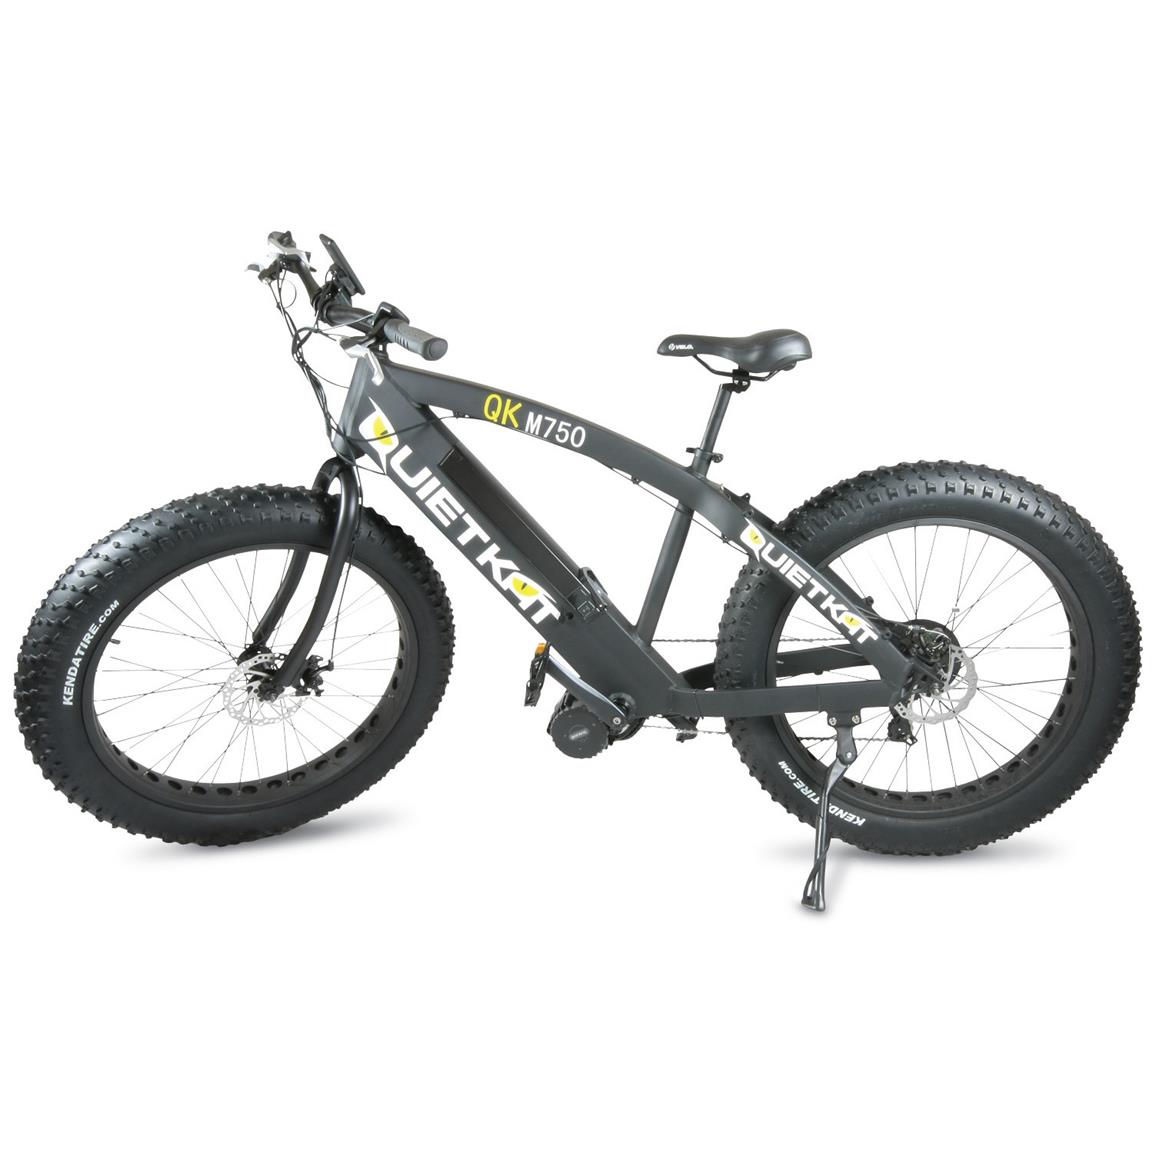 QuietKat FatKat Electric Mountain Bike, Black - 670687, Electric UTV at ...